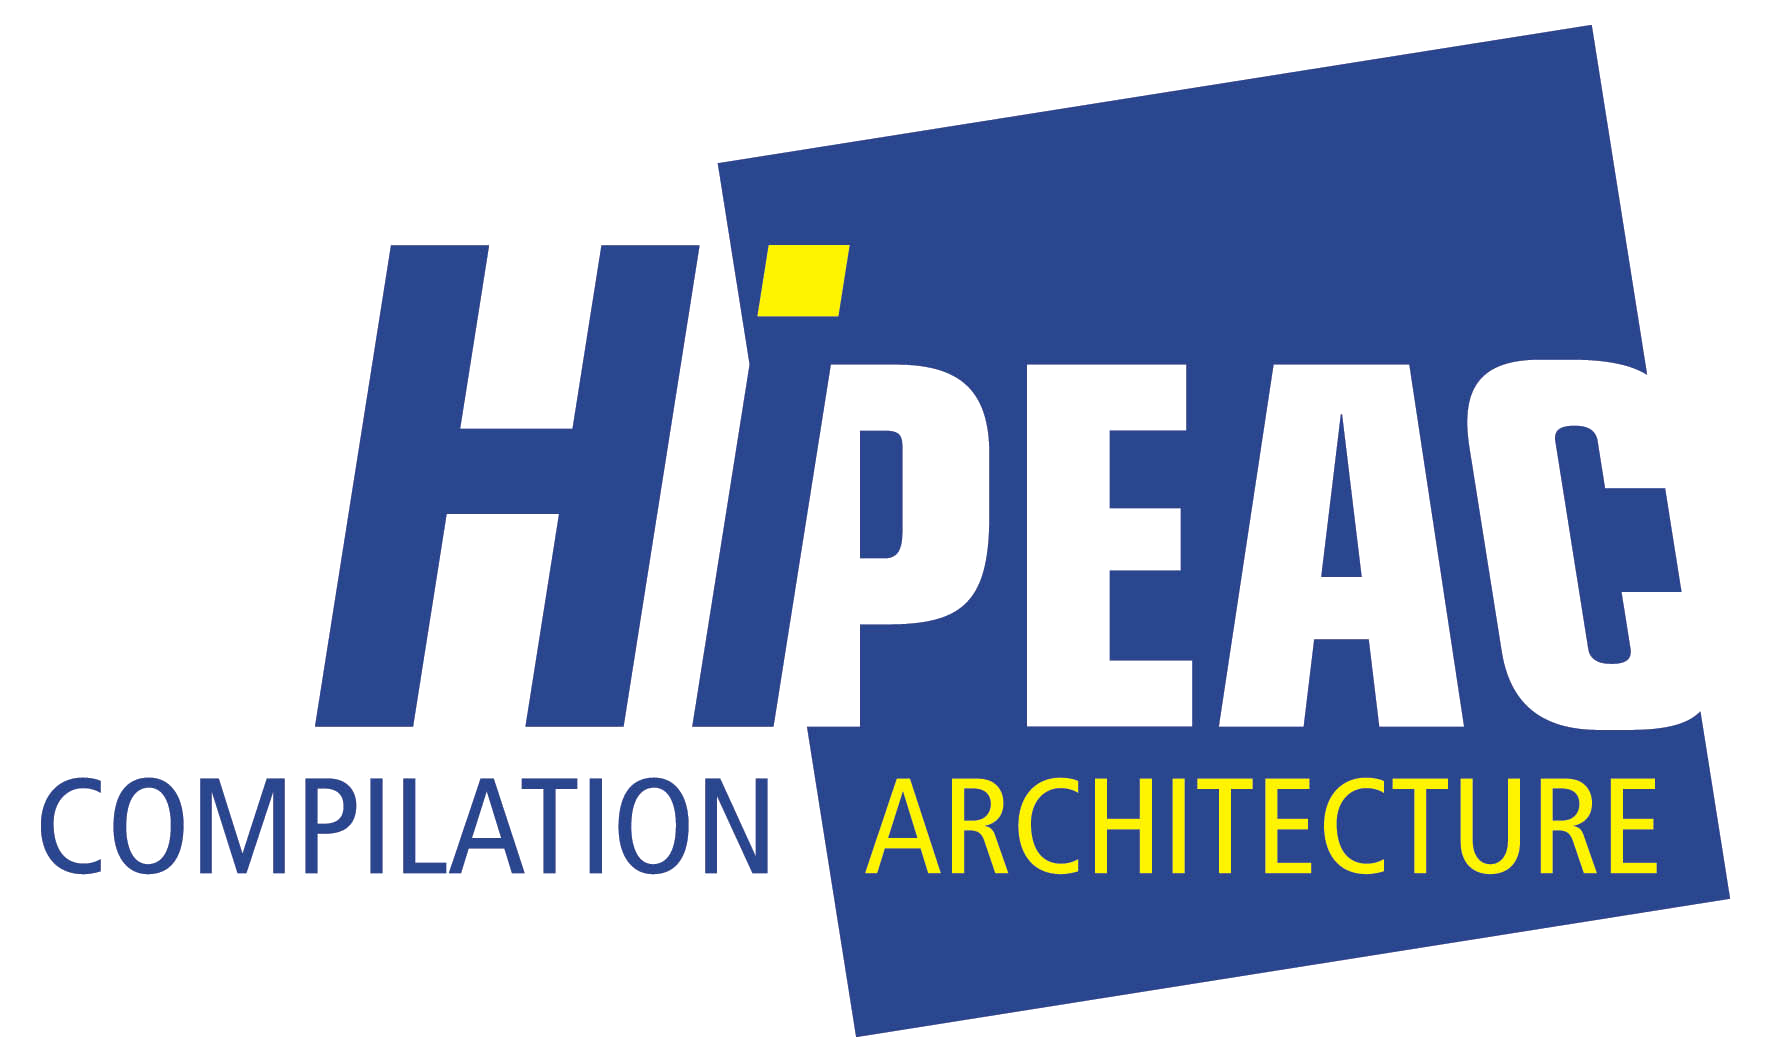 HiPEAC 2015